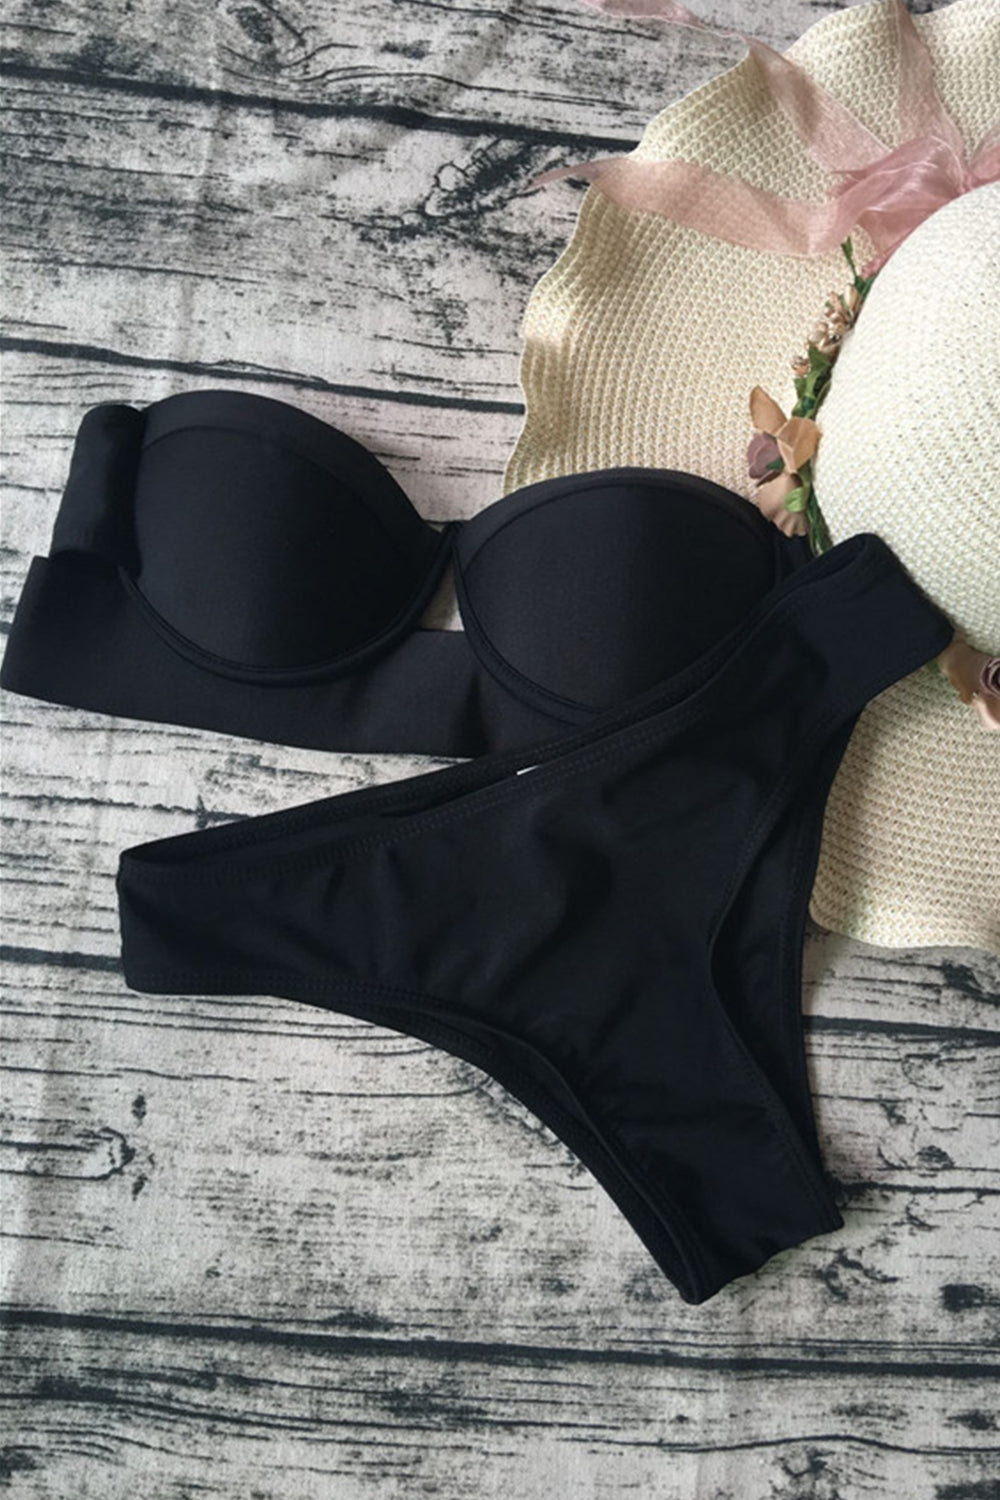 Iyasson Black Strapless Bikini Sets